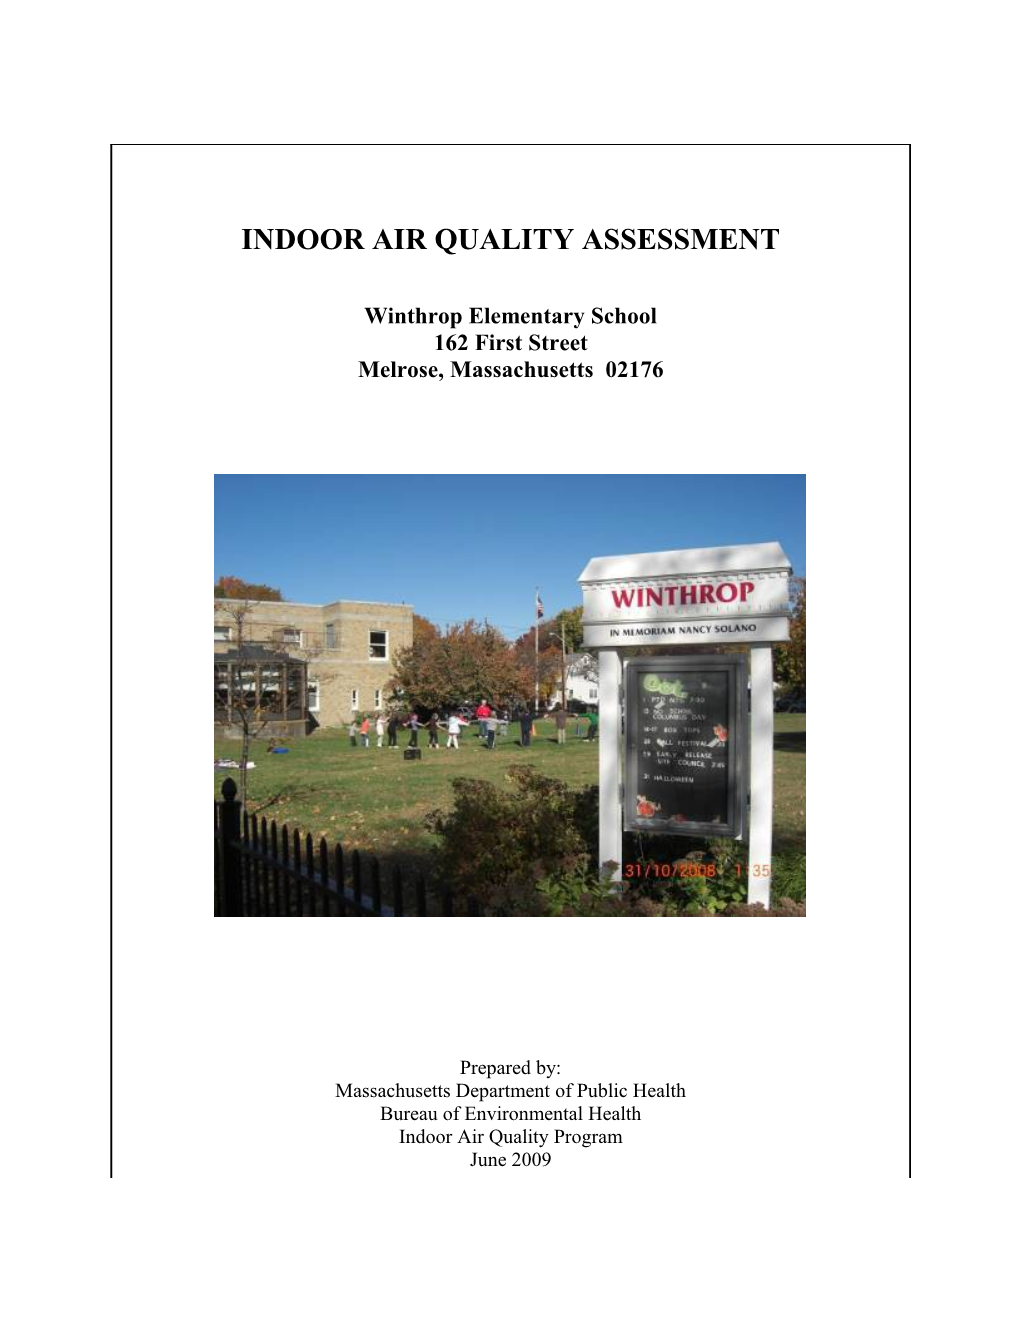 INDOOR AIR QUALITY ASSESSMENT - Winthrop Elementary School, 162 First Street